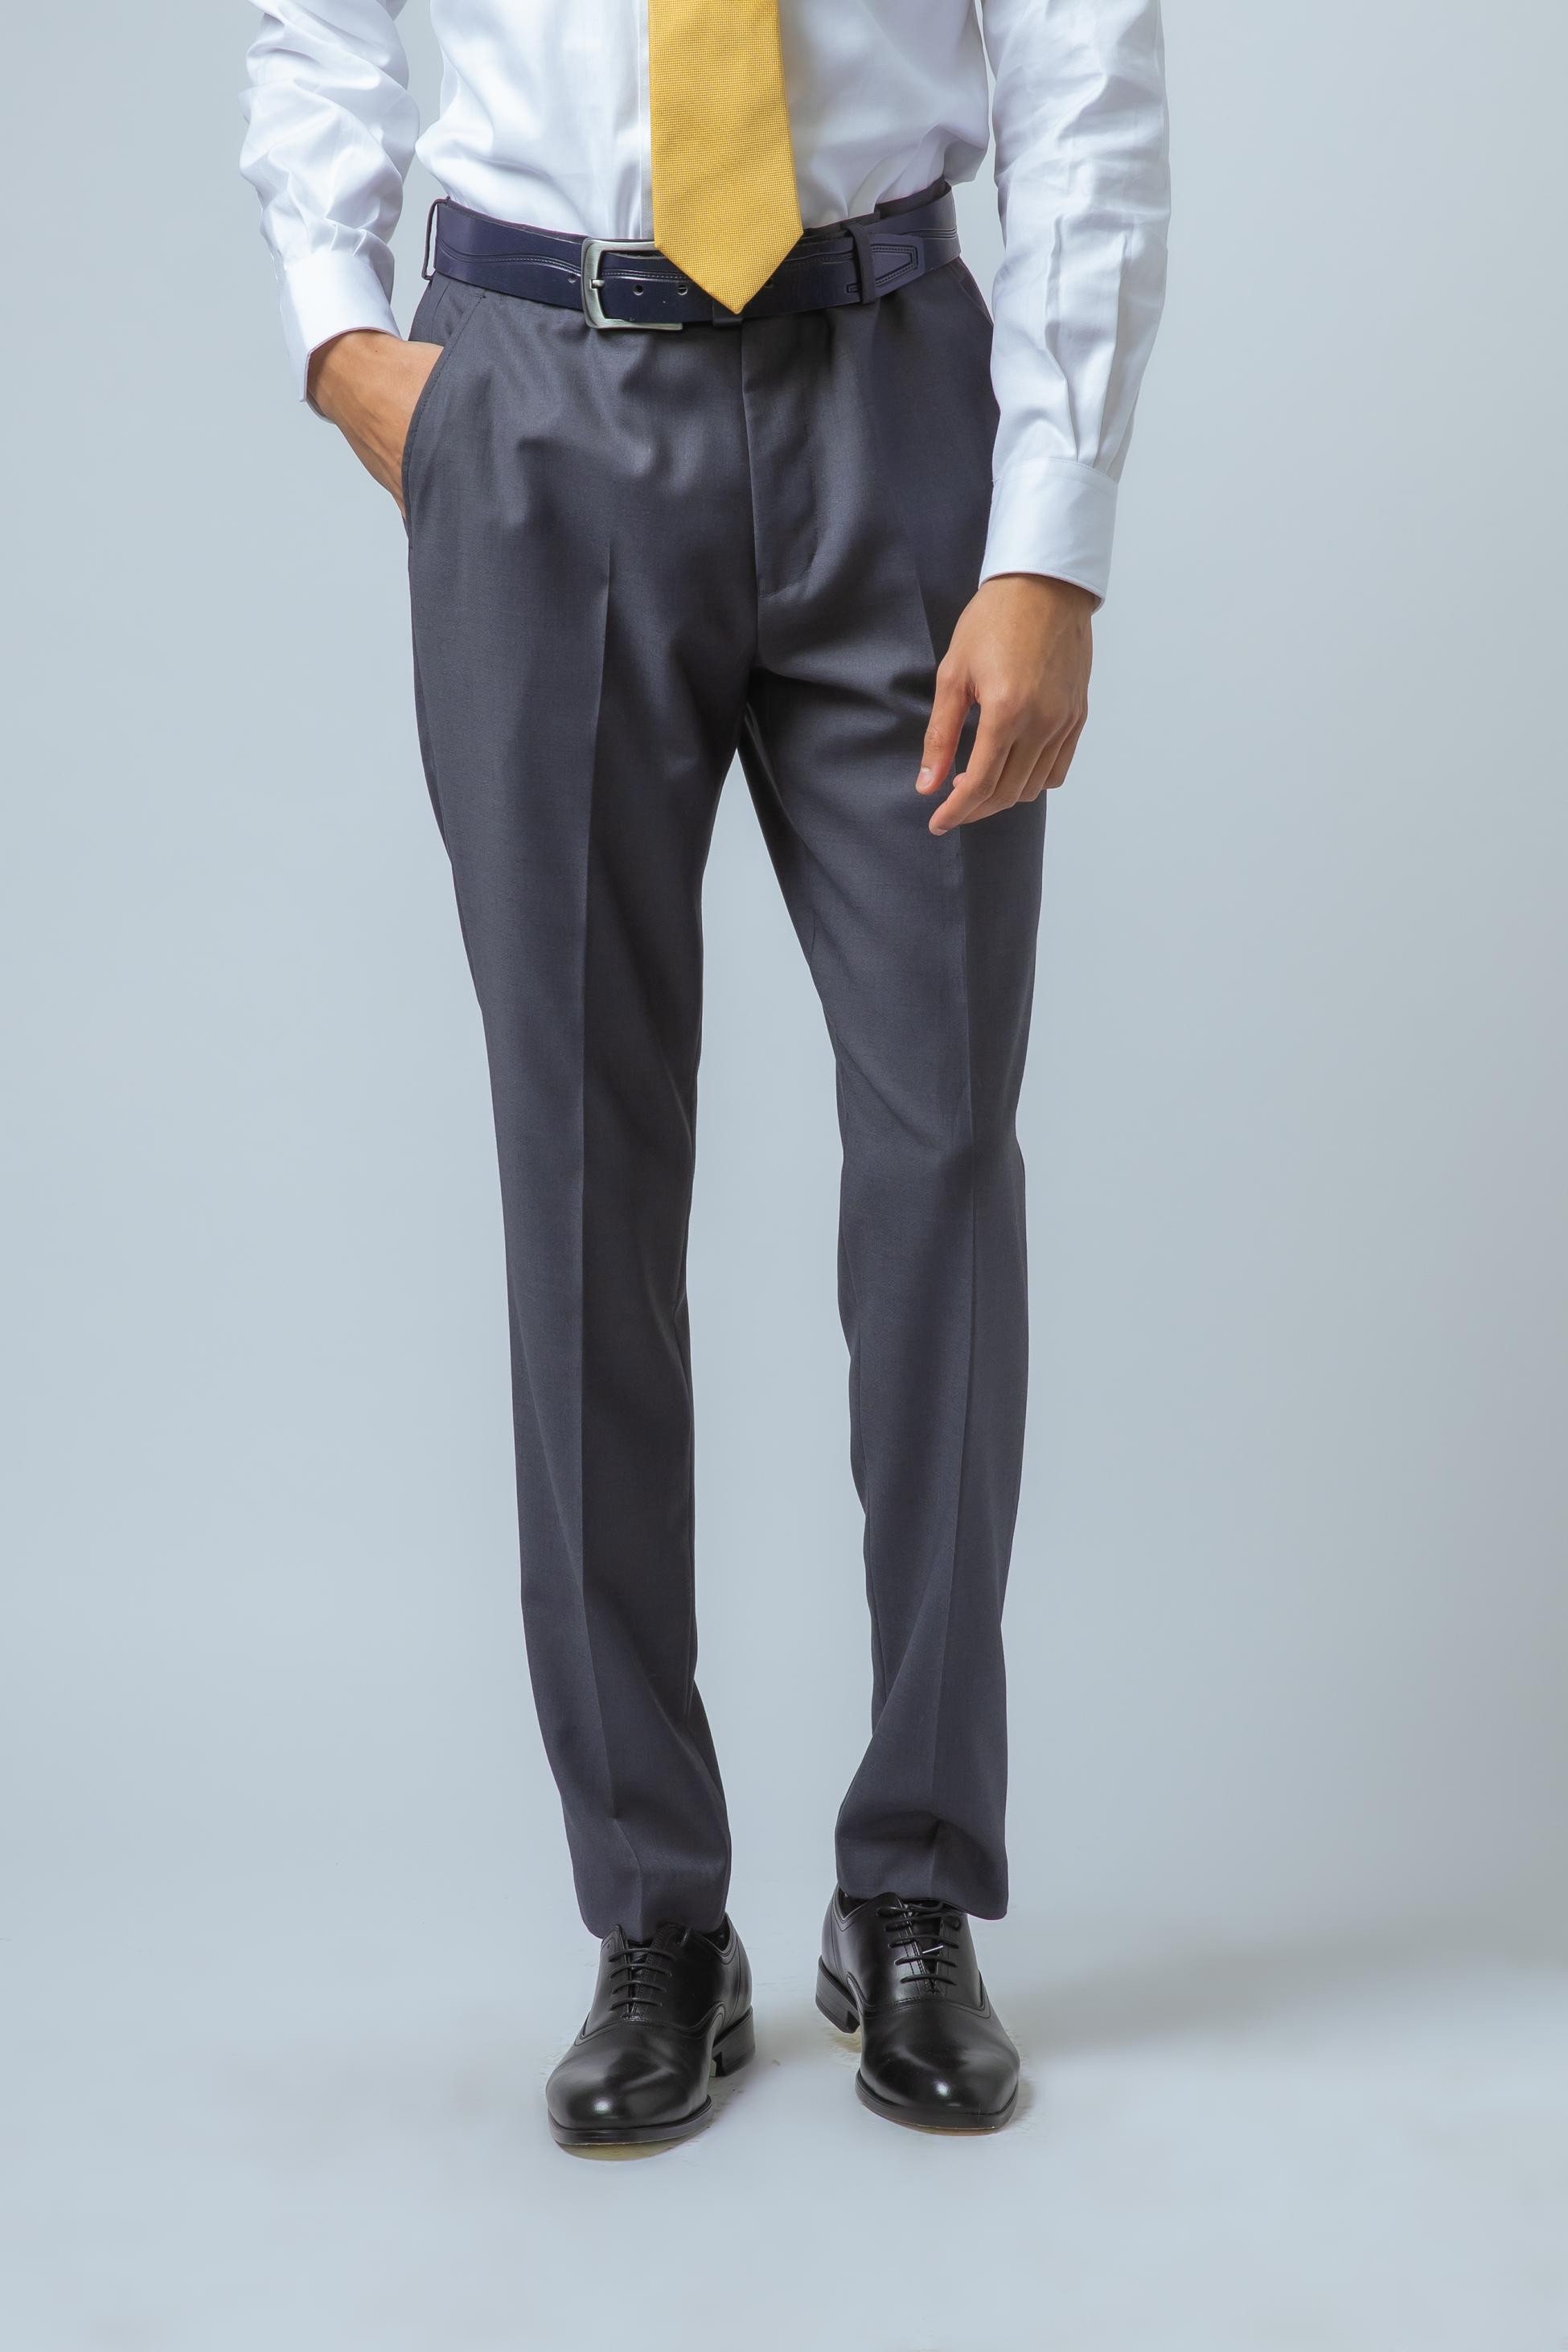 Men's Formal Grey Pants - DYLAN